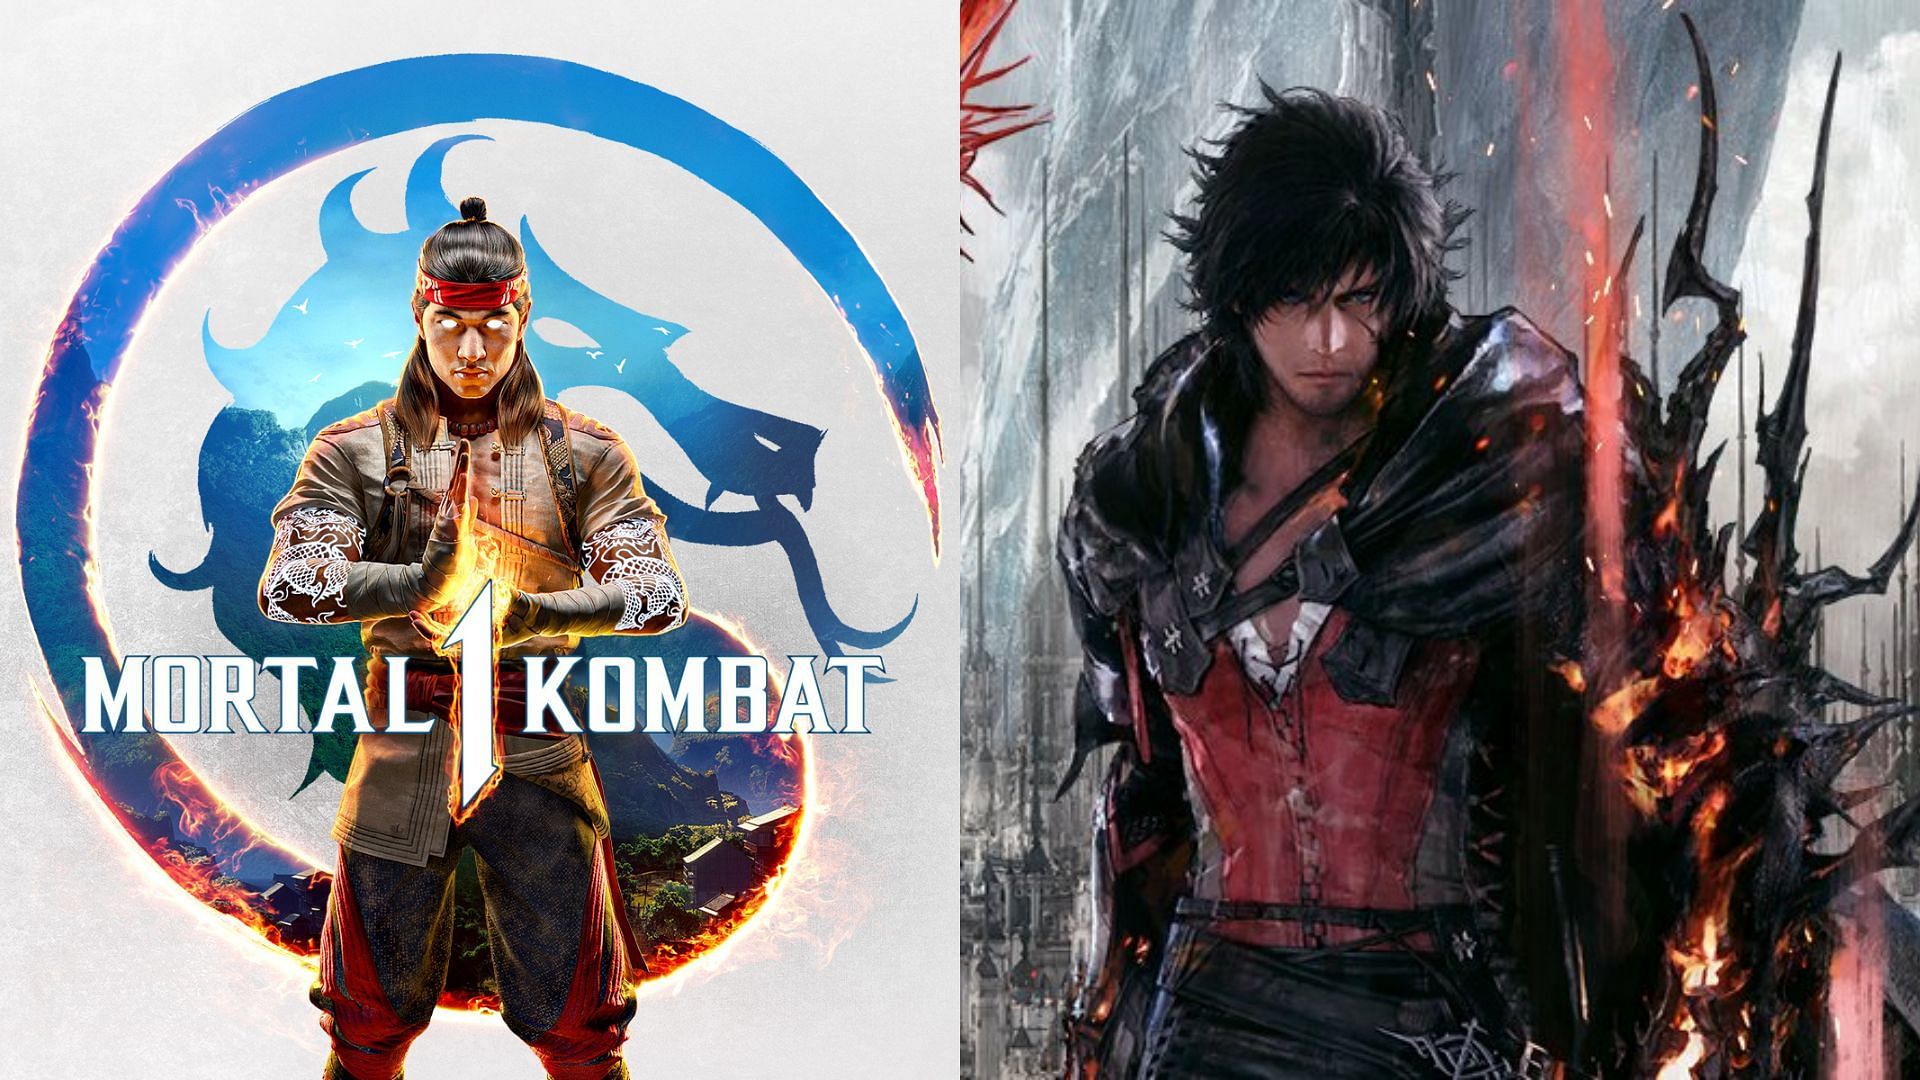 Mortal Kombat 1 leads the PS5 pre-order list leaving behind Final